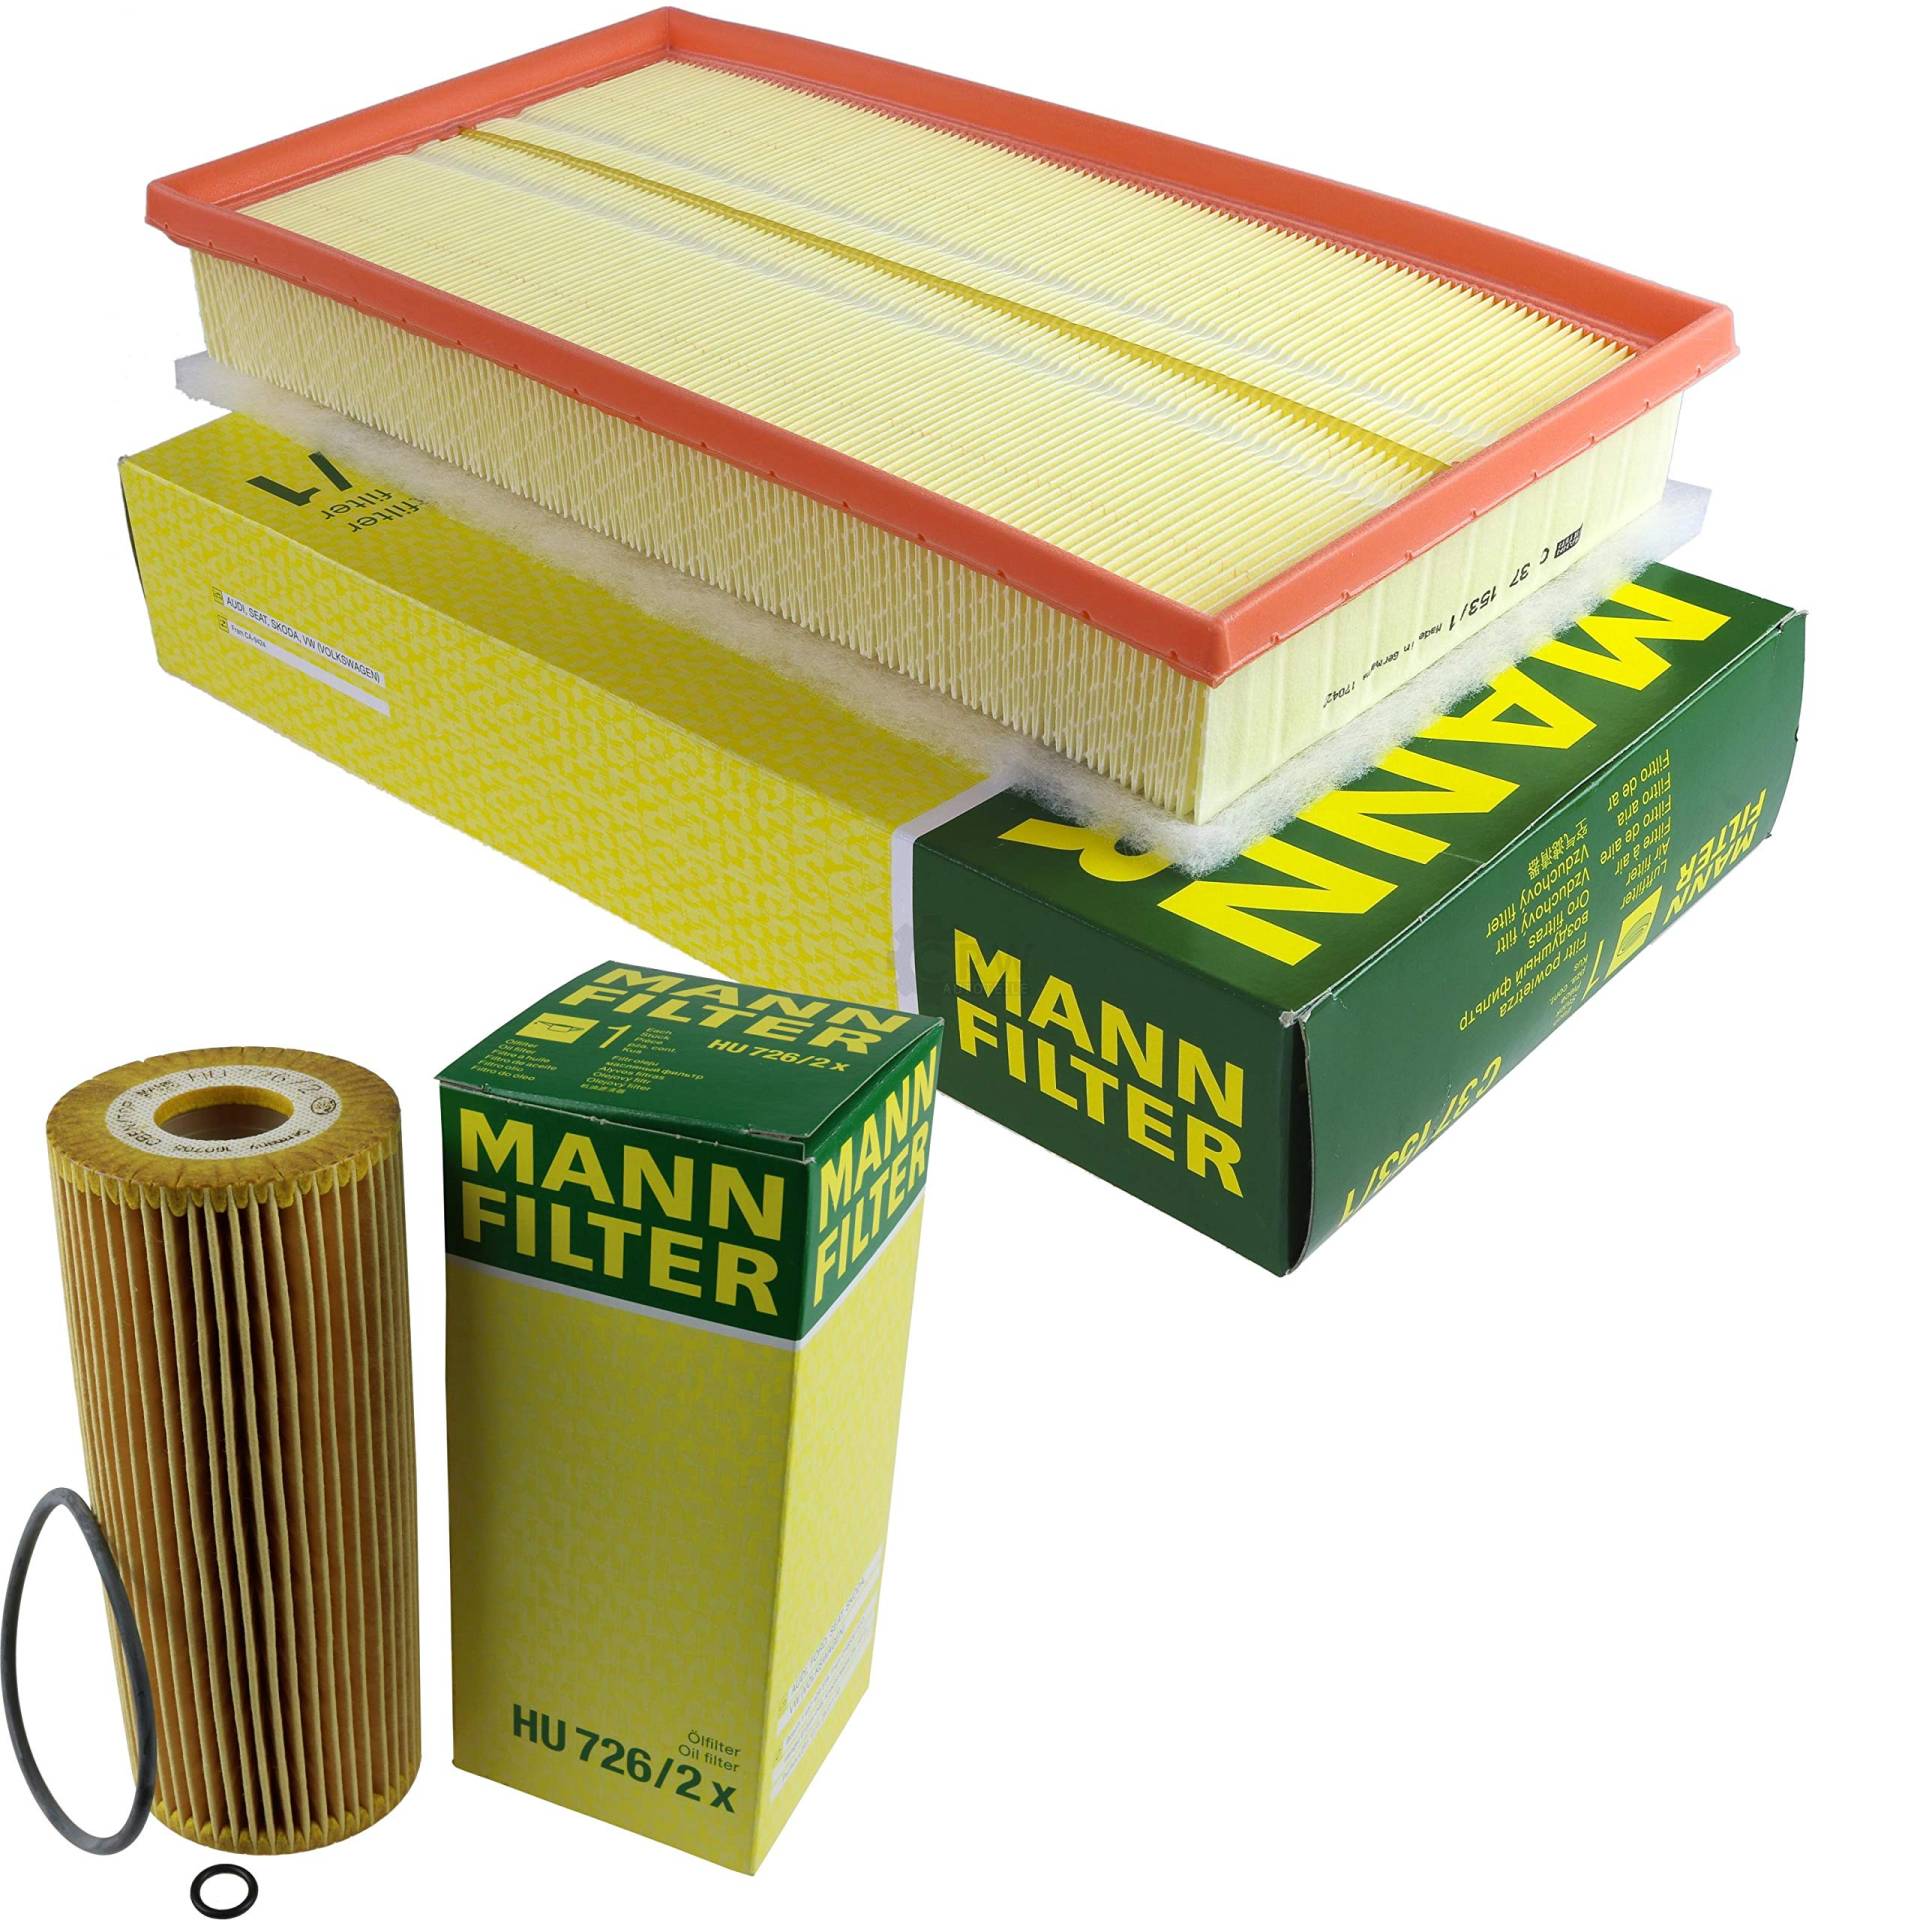 MANN-FILTER Inspektions Set Inspektionspaket Luftfilter Ölfilter von QR-Parts